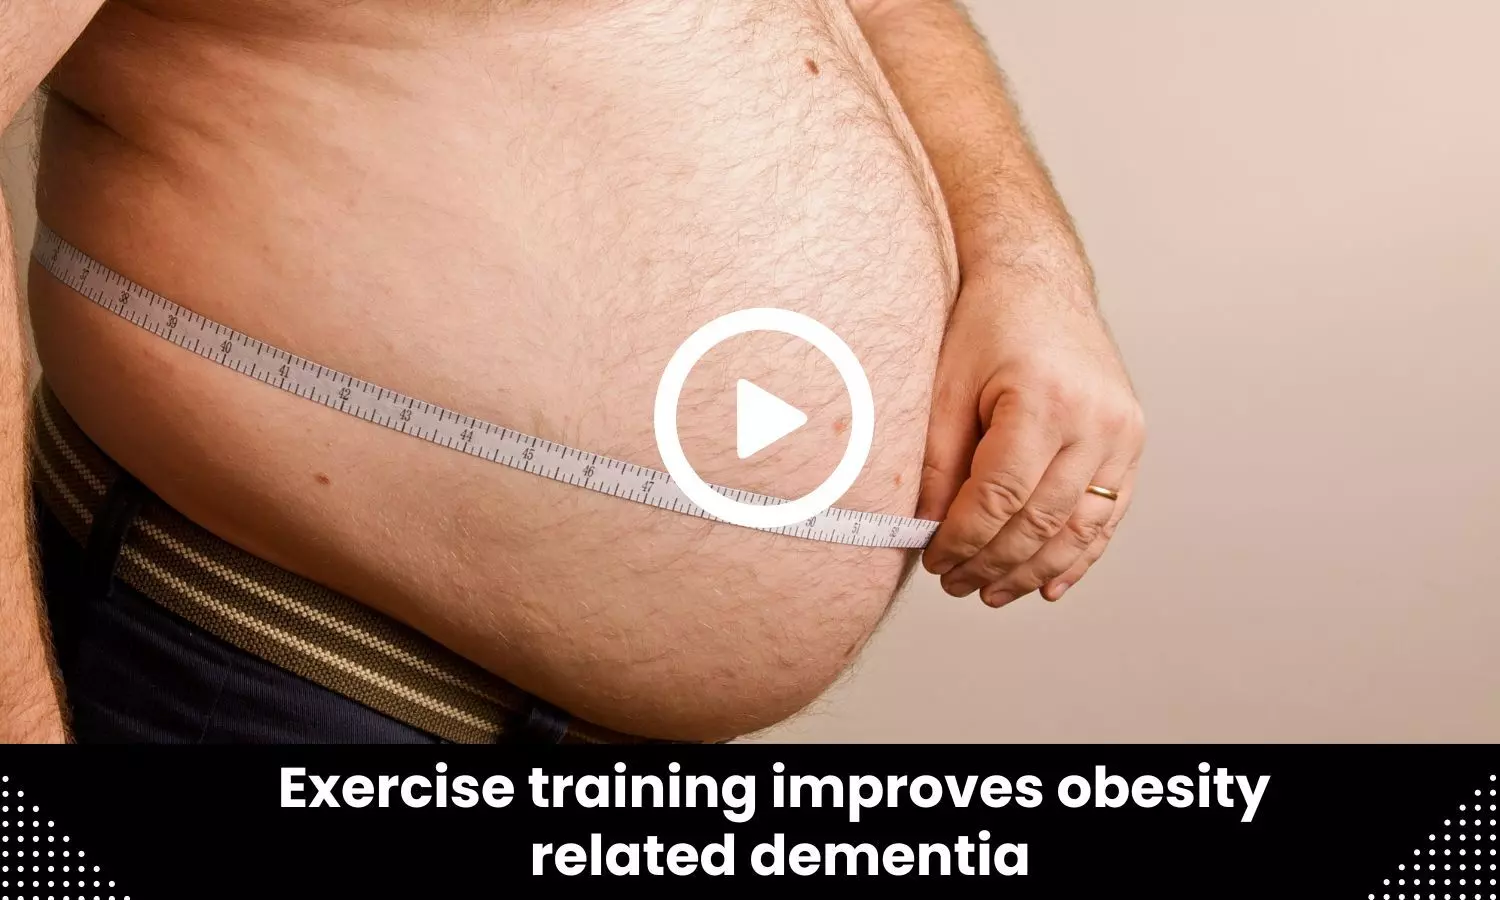 Exercise training improves obesity-related dementia